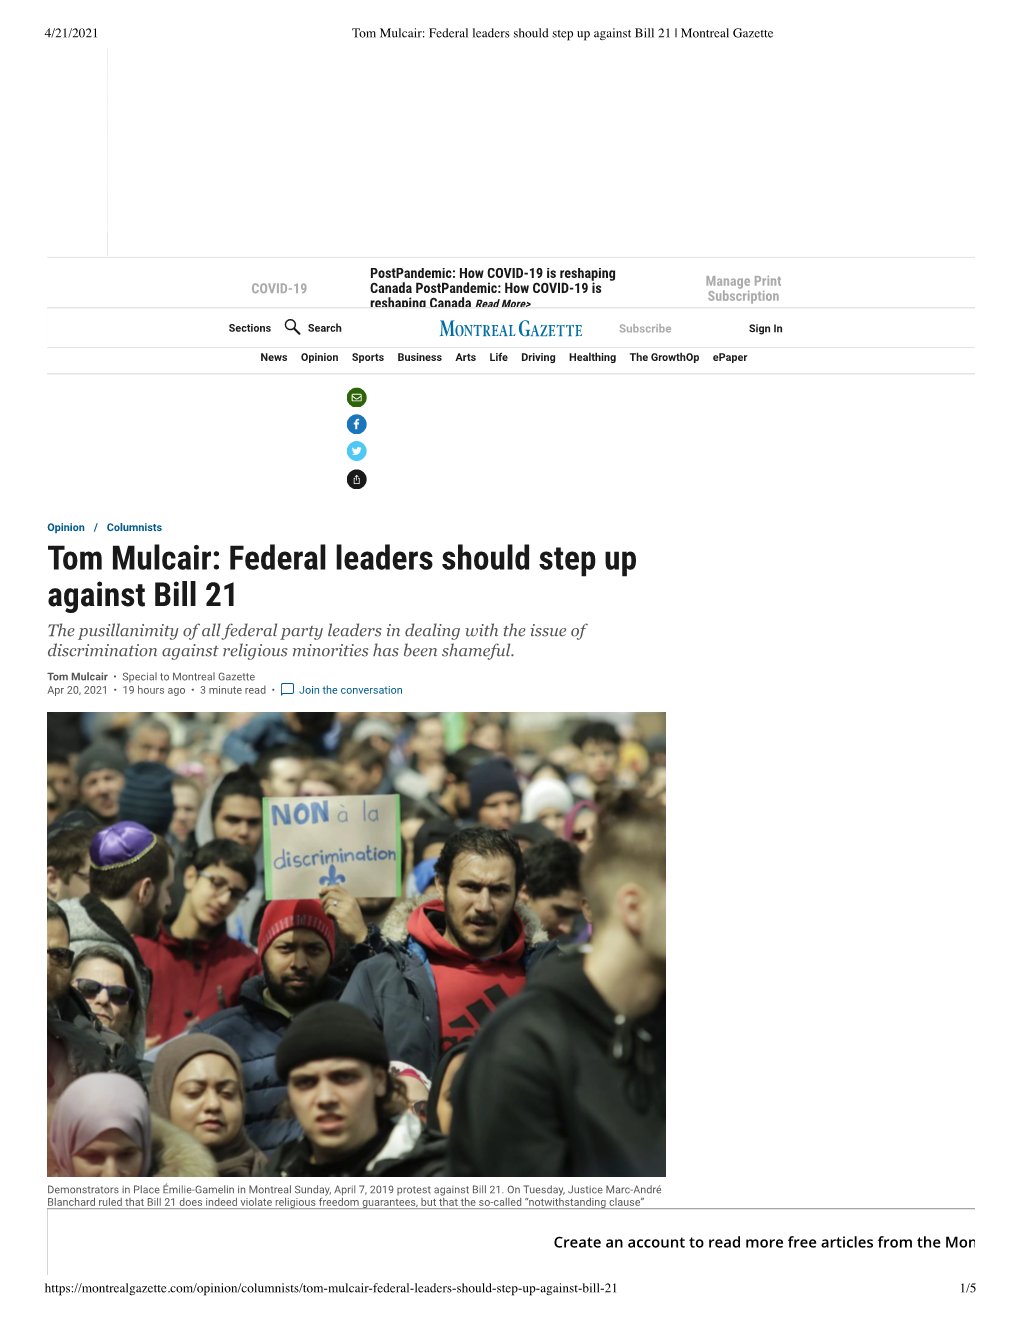 Tom Mulcair: Federal Leaders Should Step up Against Bill 21 | Montreal Gazette